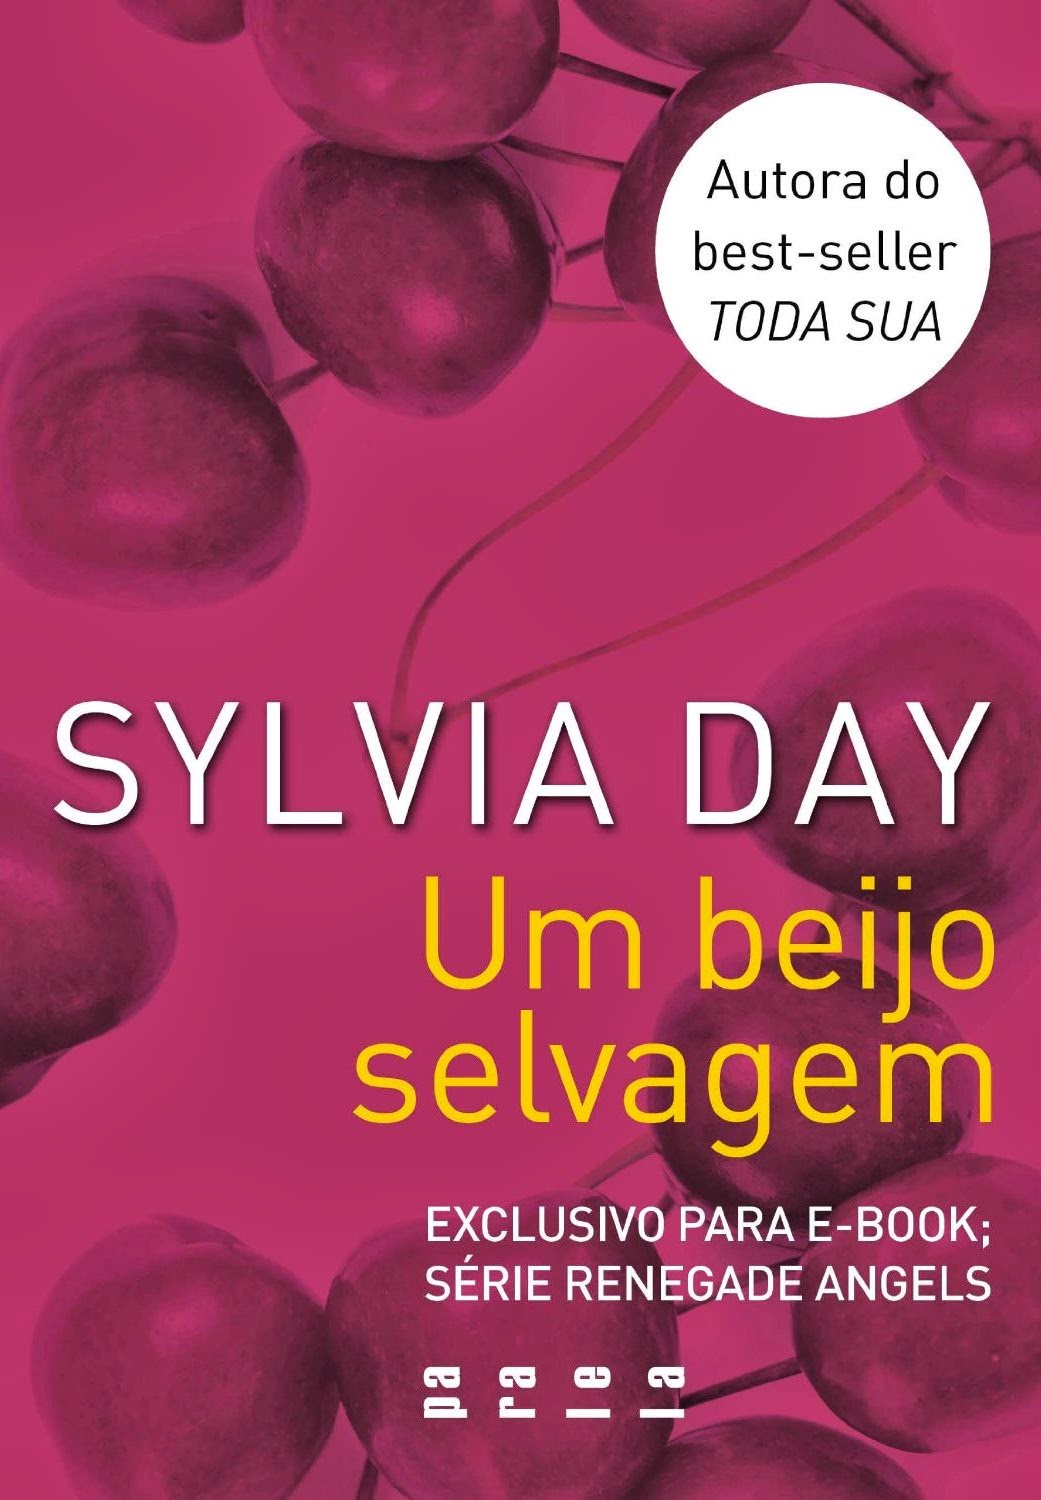 Download Livros Sylvia Day Gratis